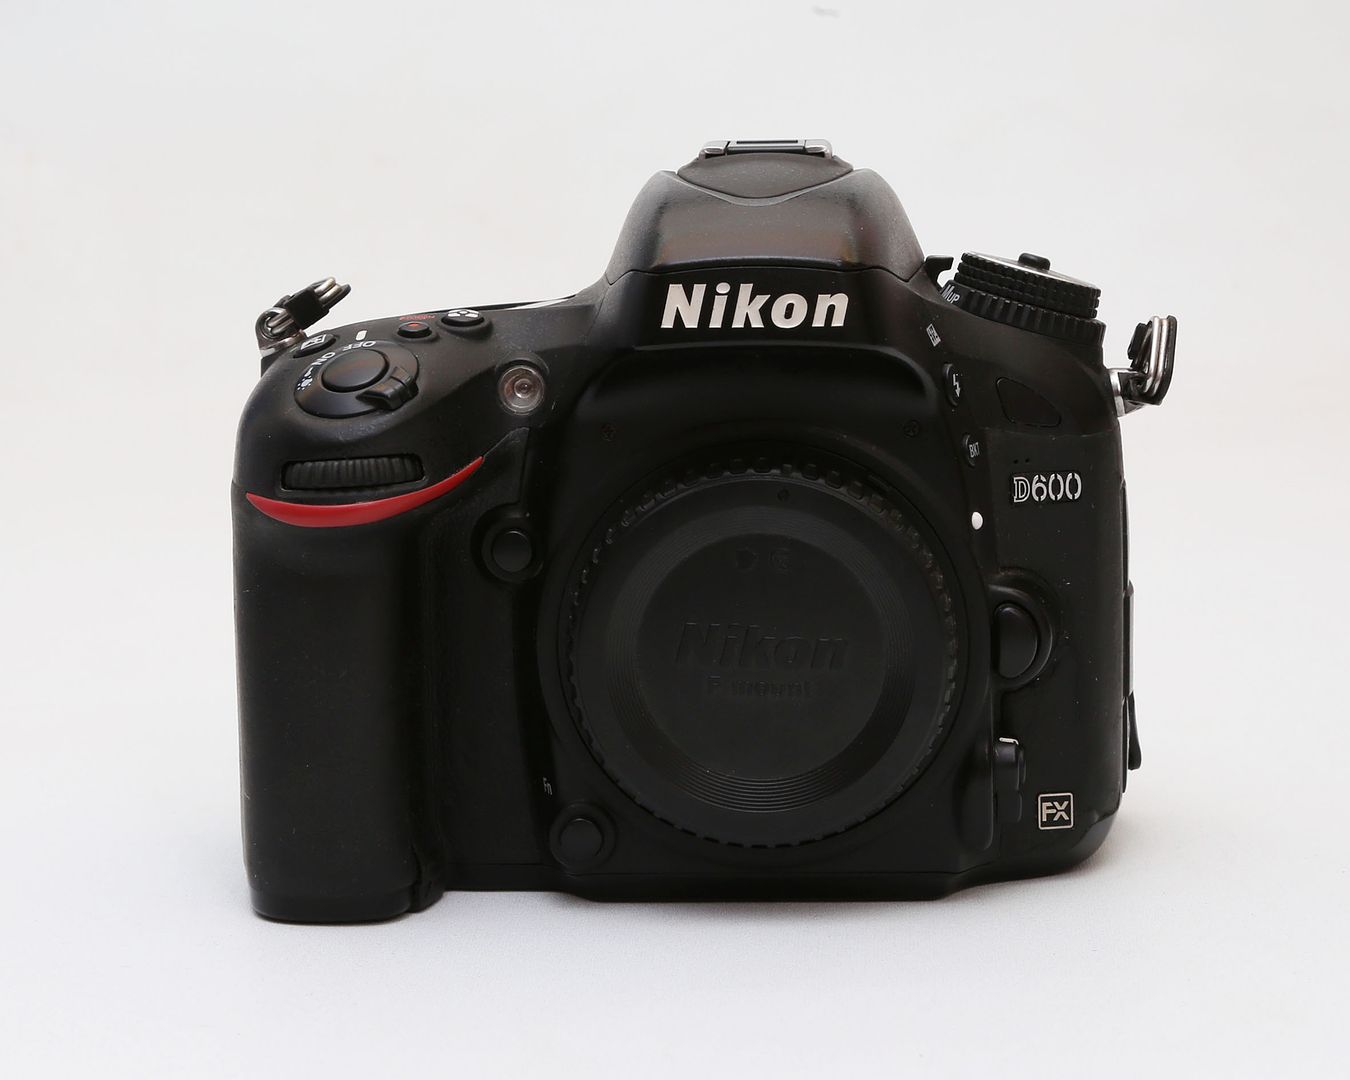 http://i54.photobucket.com/albums/g115/chuacotien/Nikon/Nikon%20DSLR/d600a_zpsbu9uvnhg.jpg